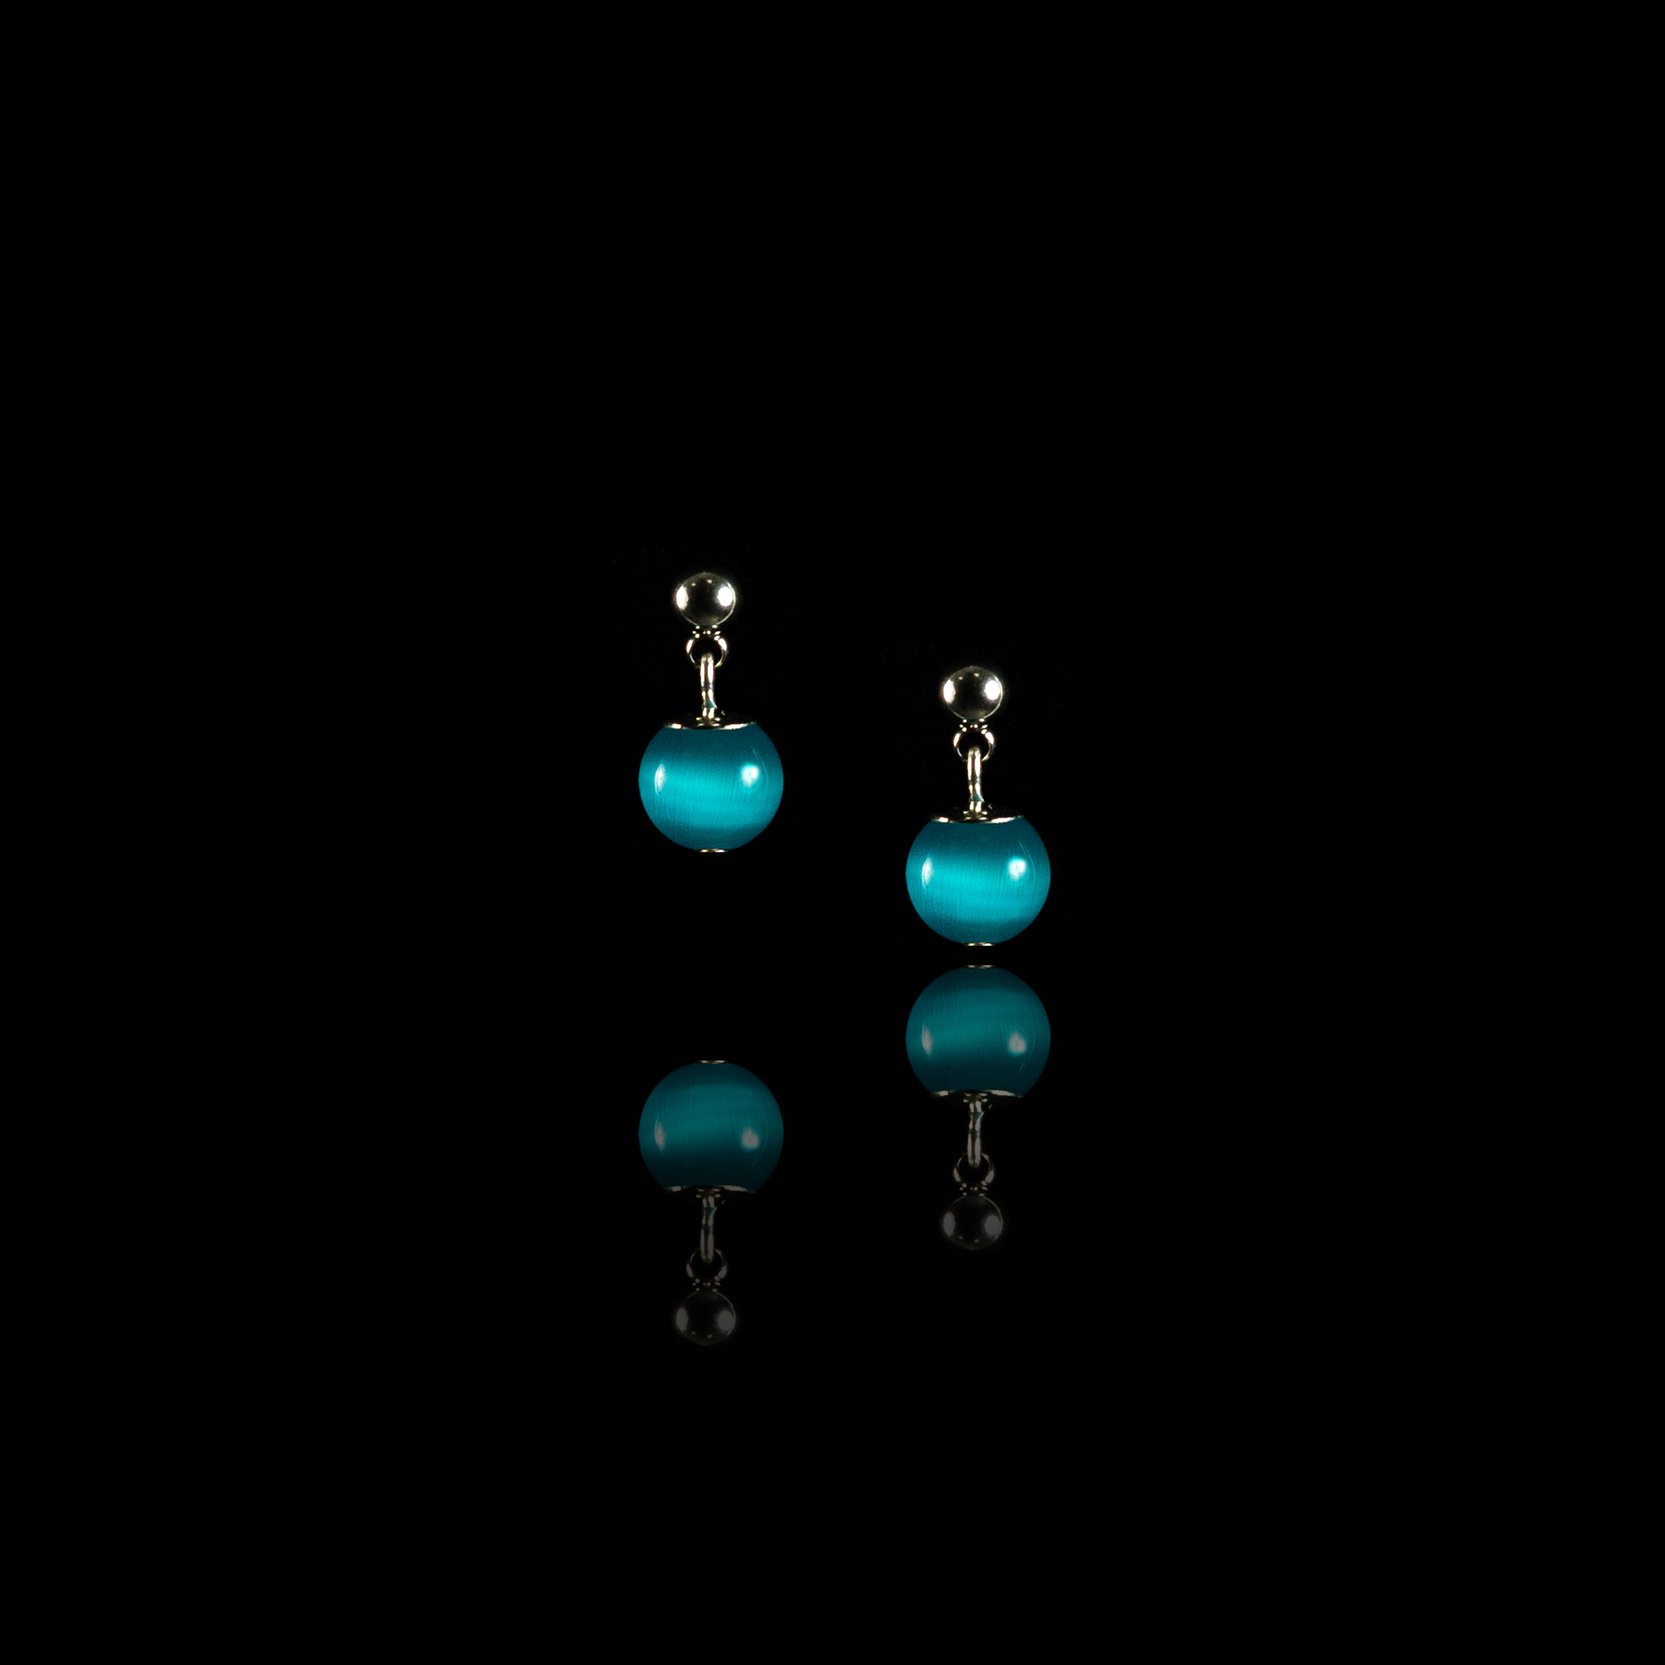 Cute little earrings with a blue stone.